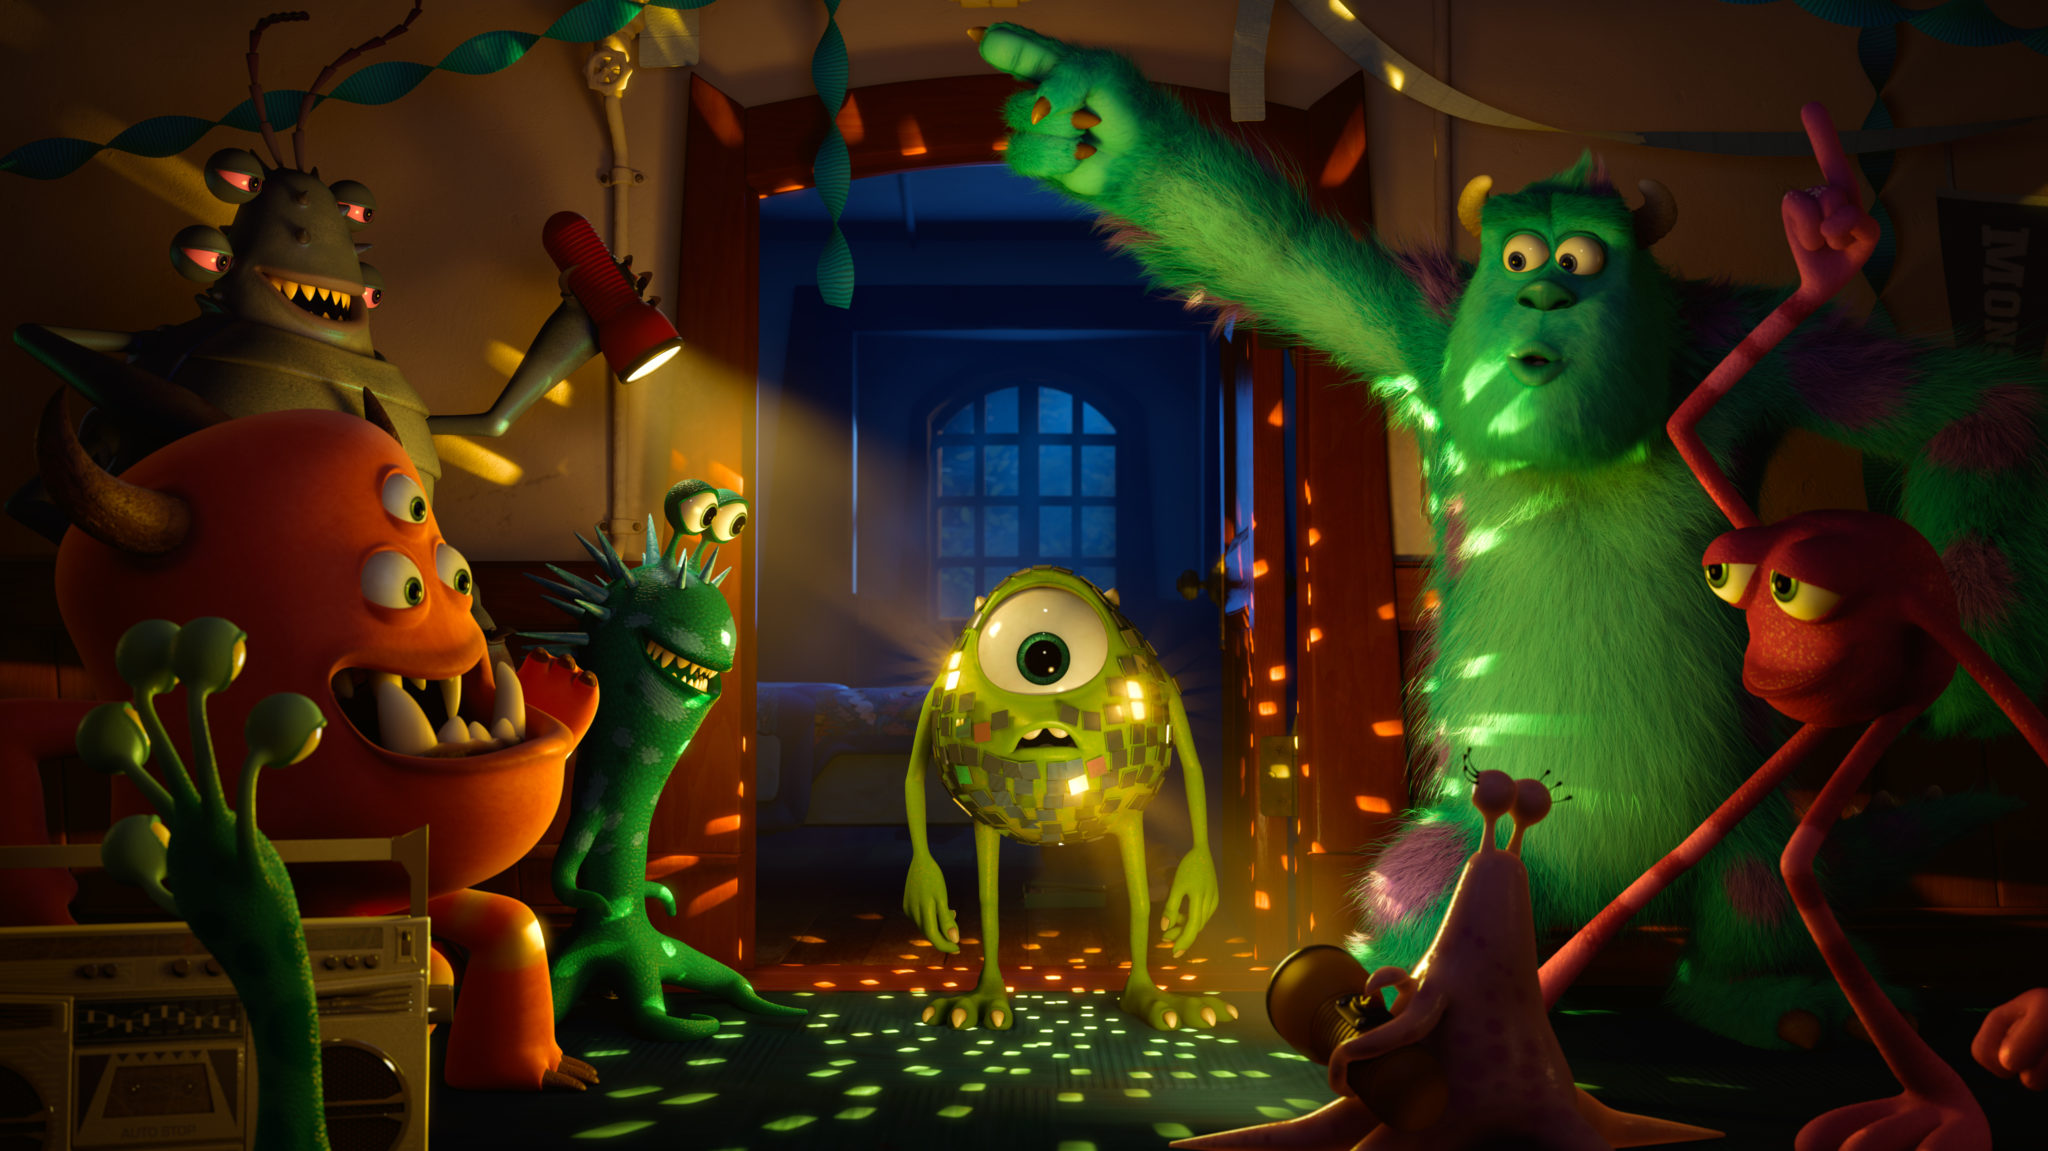 Pixar Rewind: 'Monsters University' - Rotoscopers